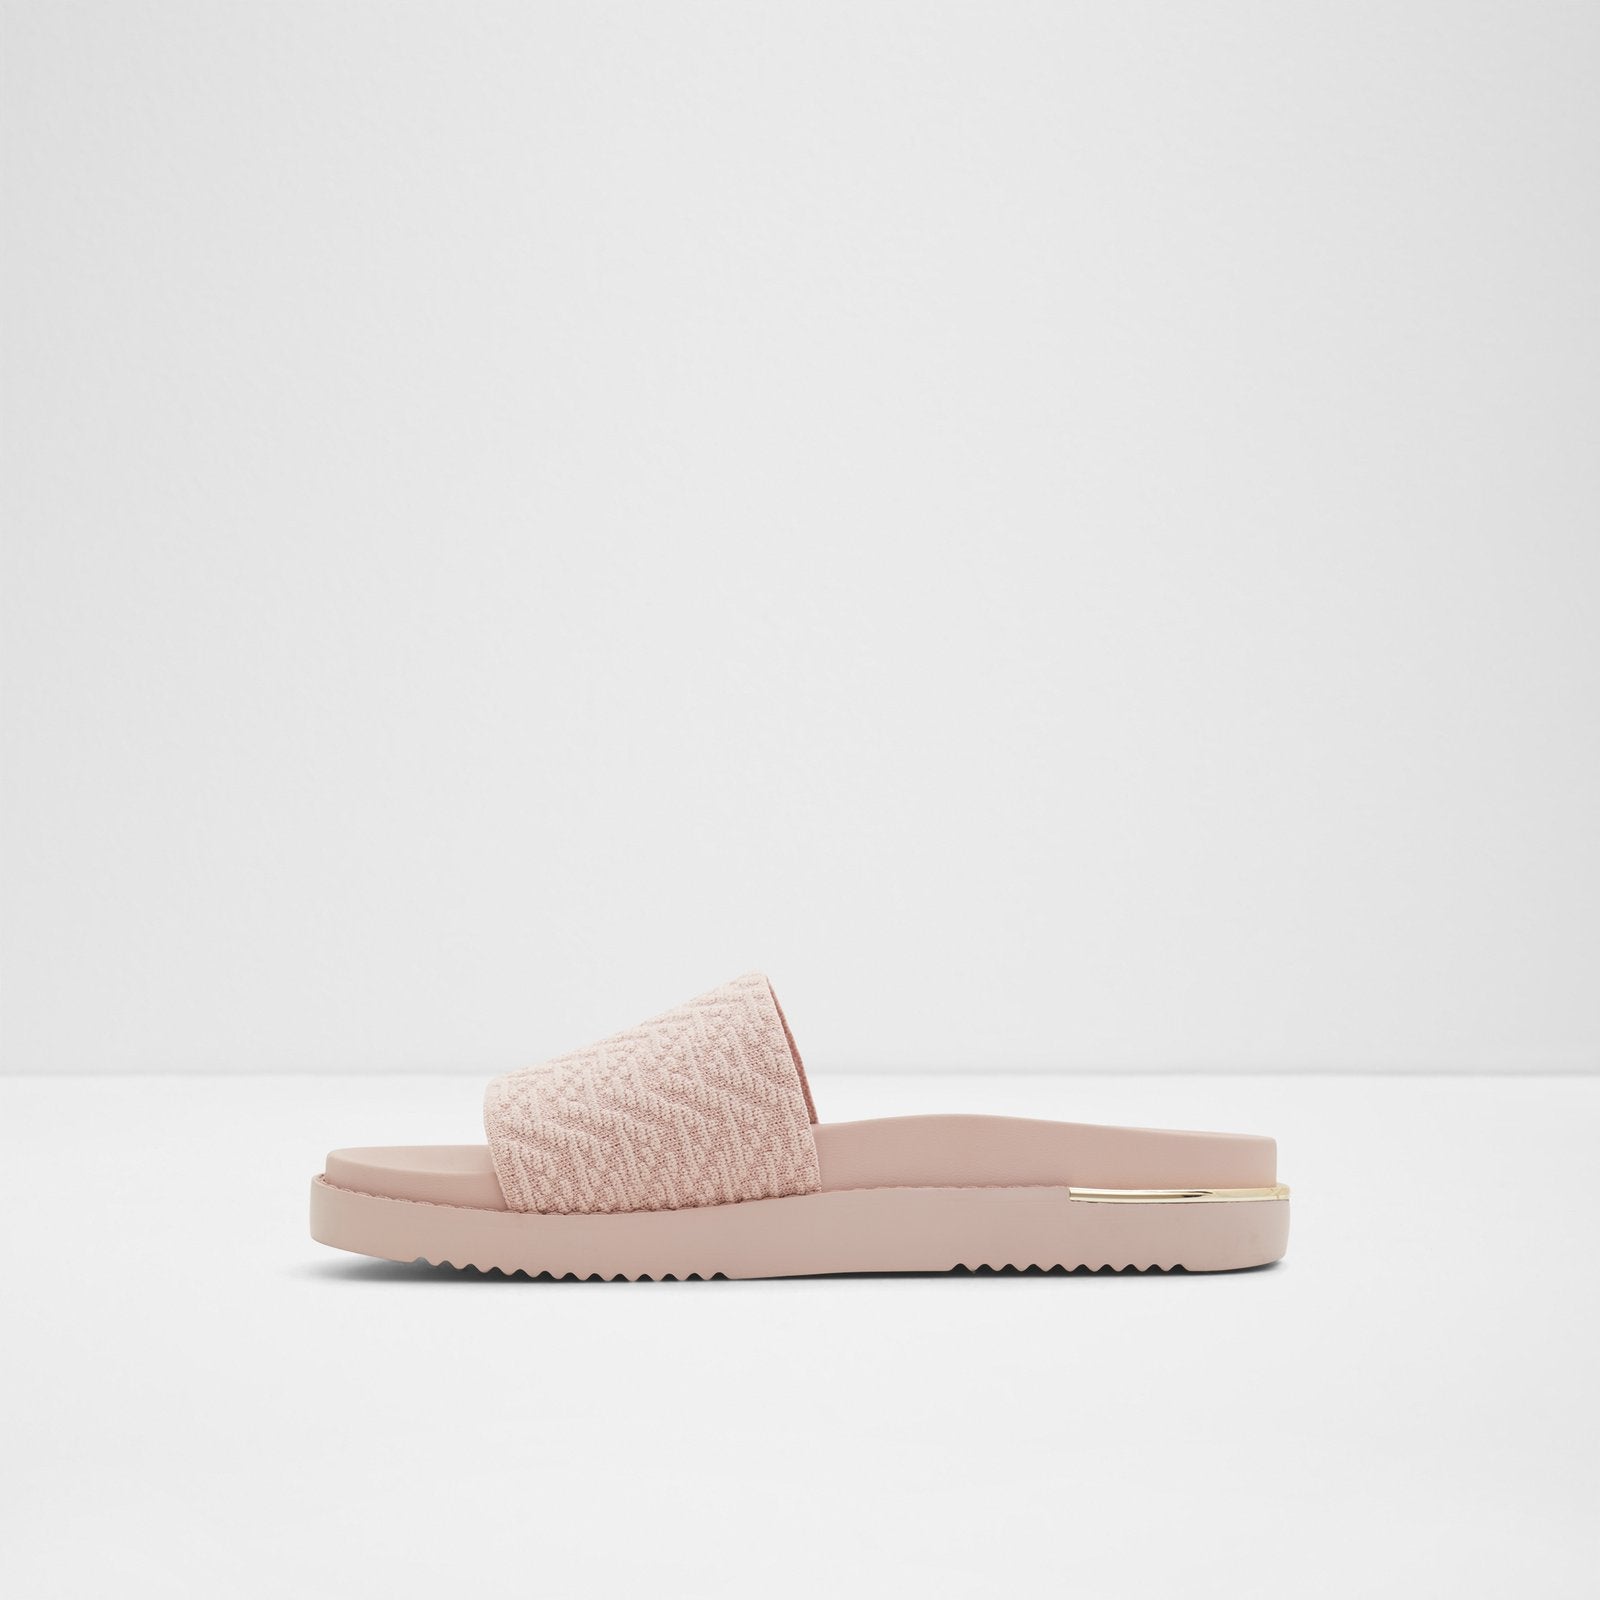 Toodyay / Flat Sandals Women Shoes - Light Pink - ALDO KSA